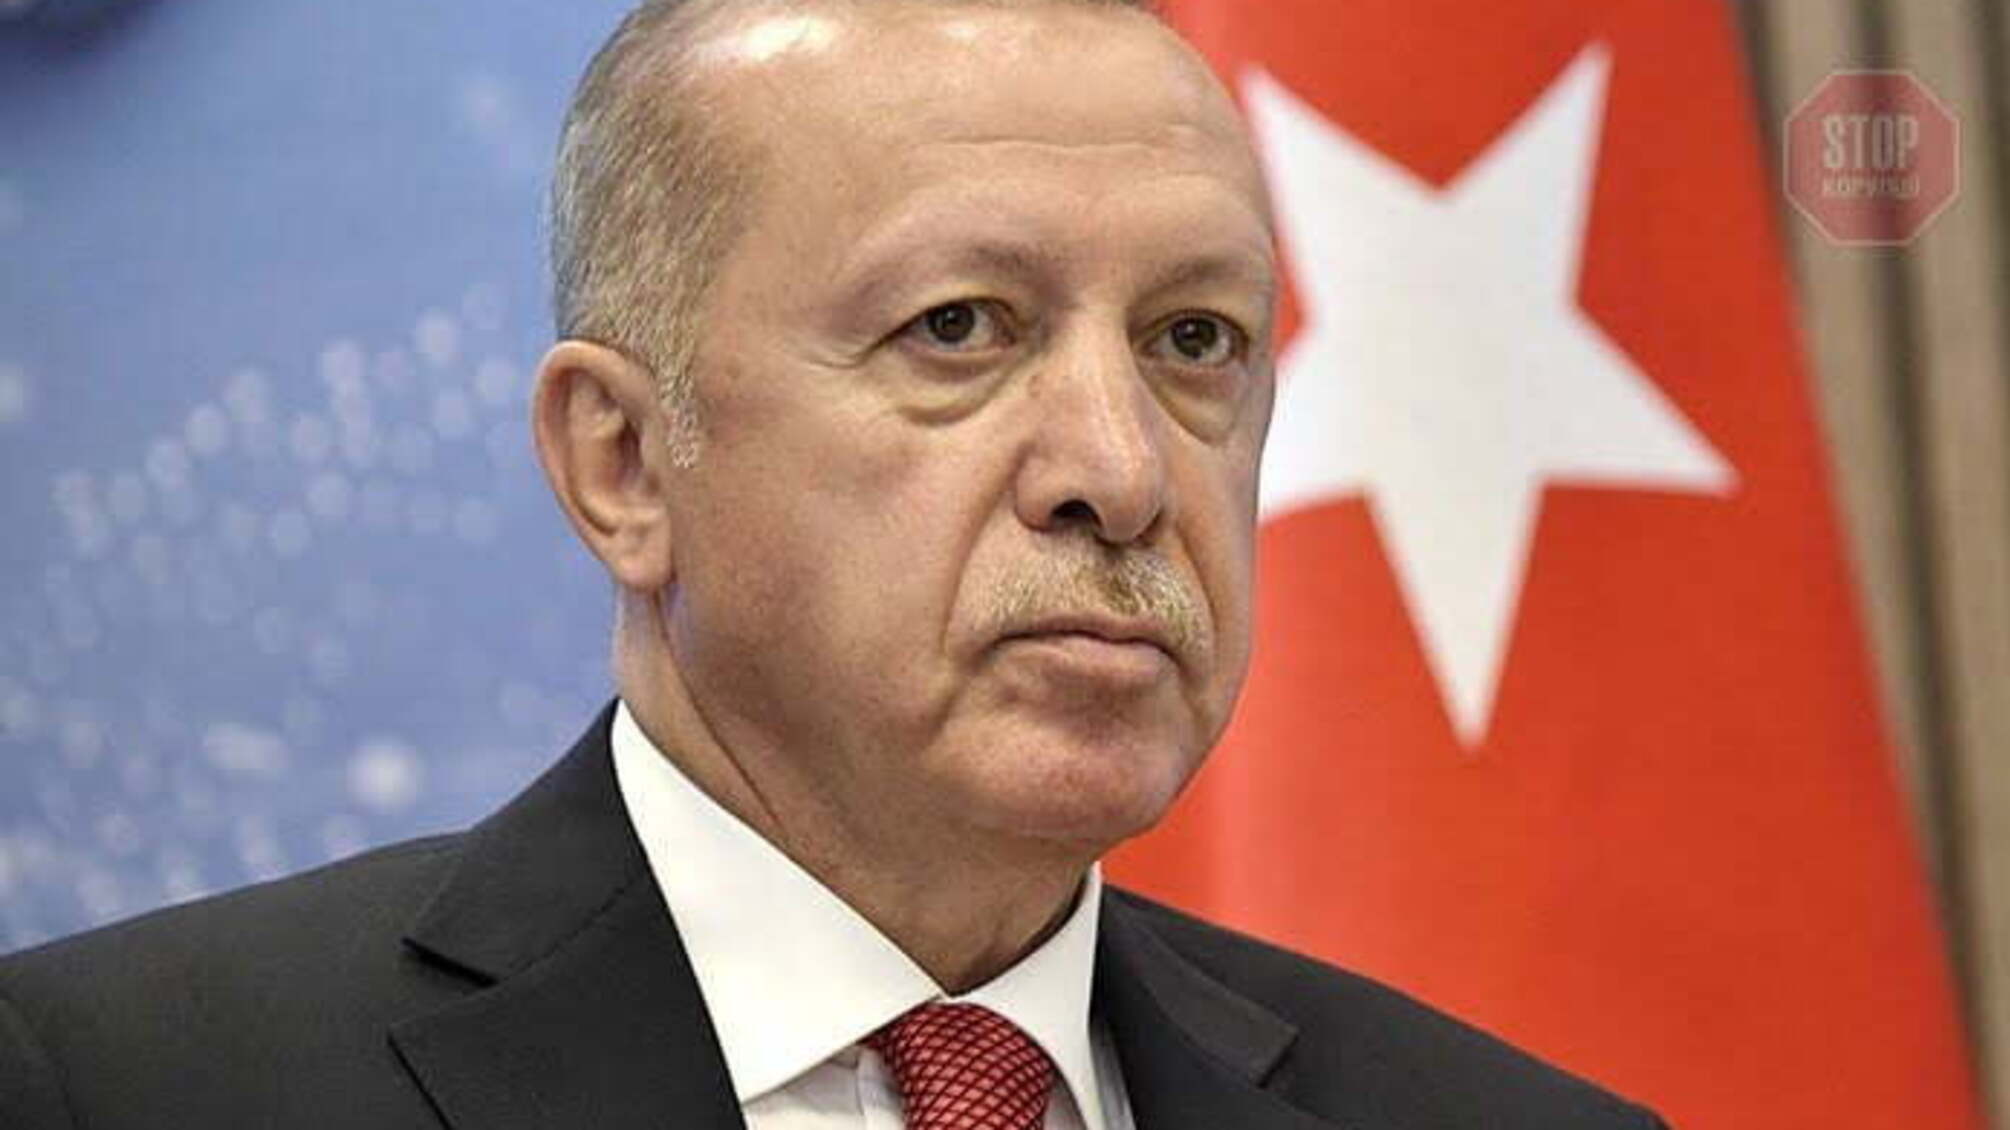 Президент Туреччини оголосив райони лісових пожеж зонами лиха